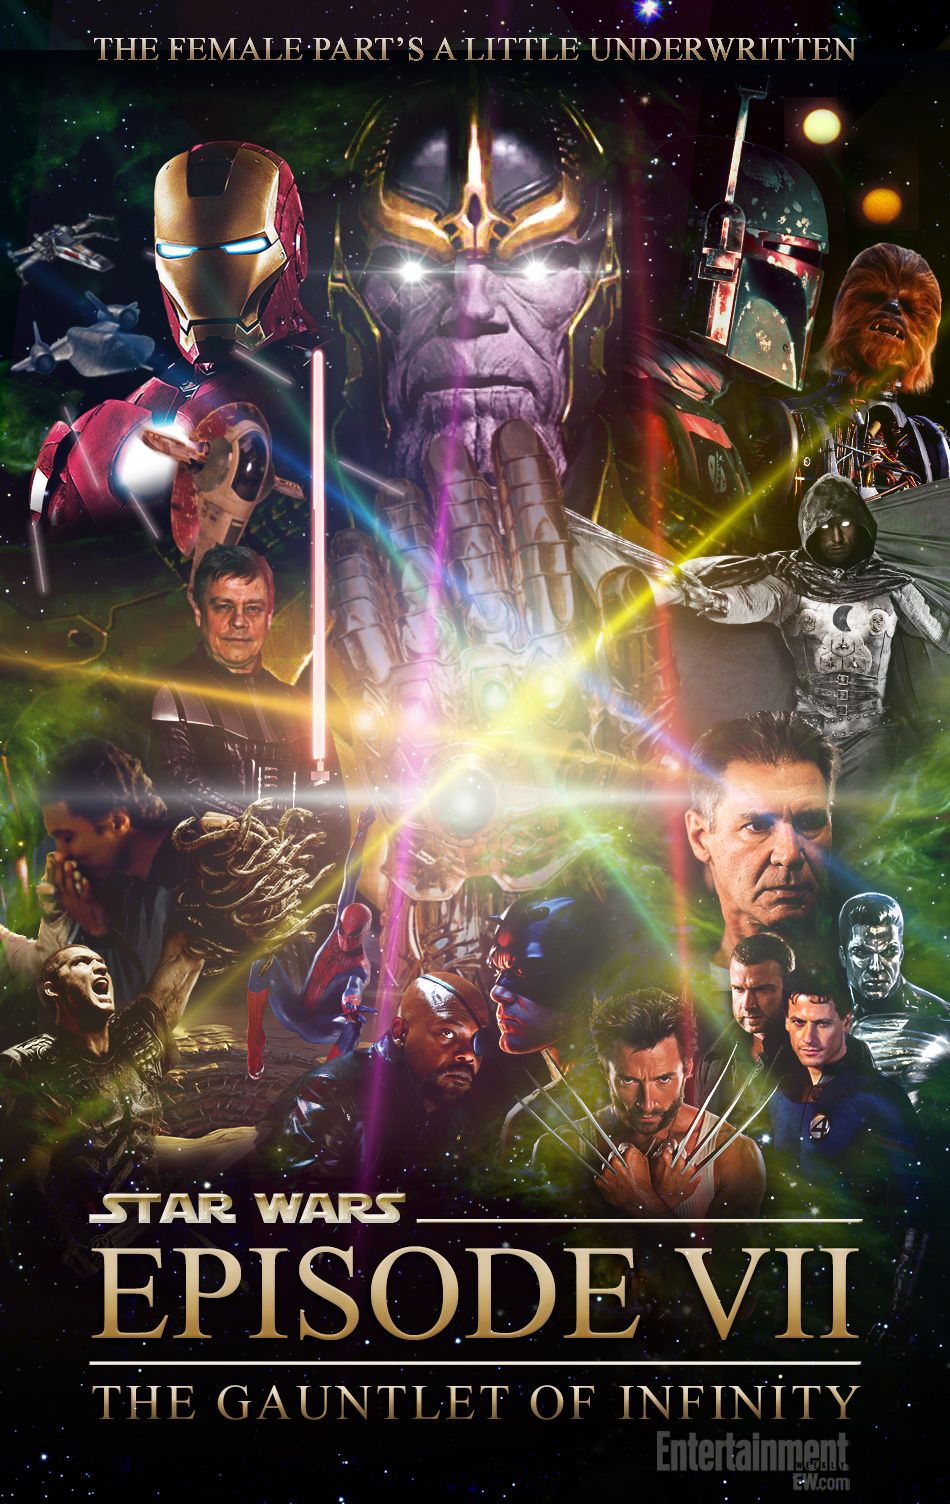 Star Wars: Episode VII - The Gauntlet of Infinity Poster